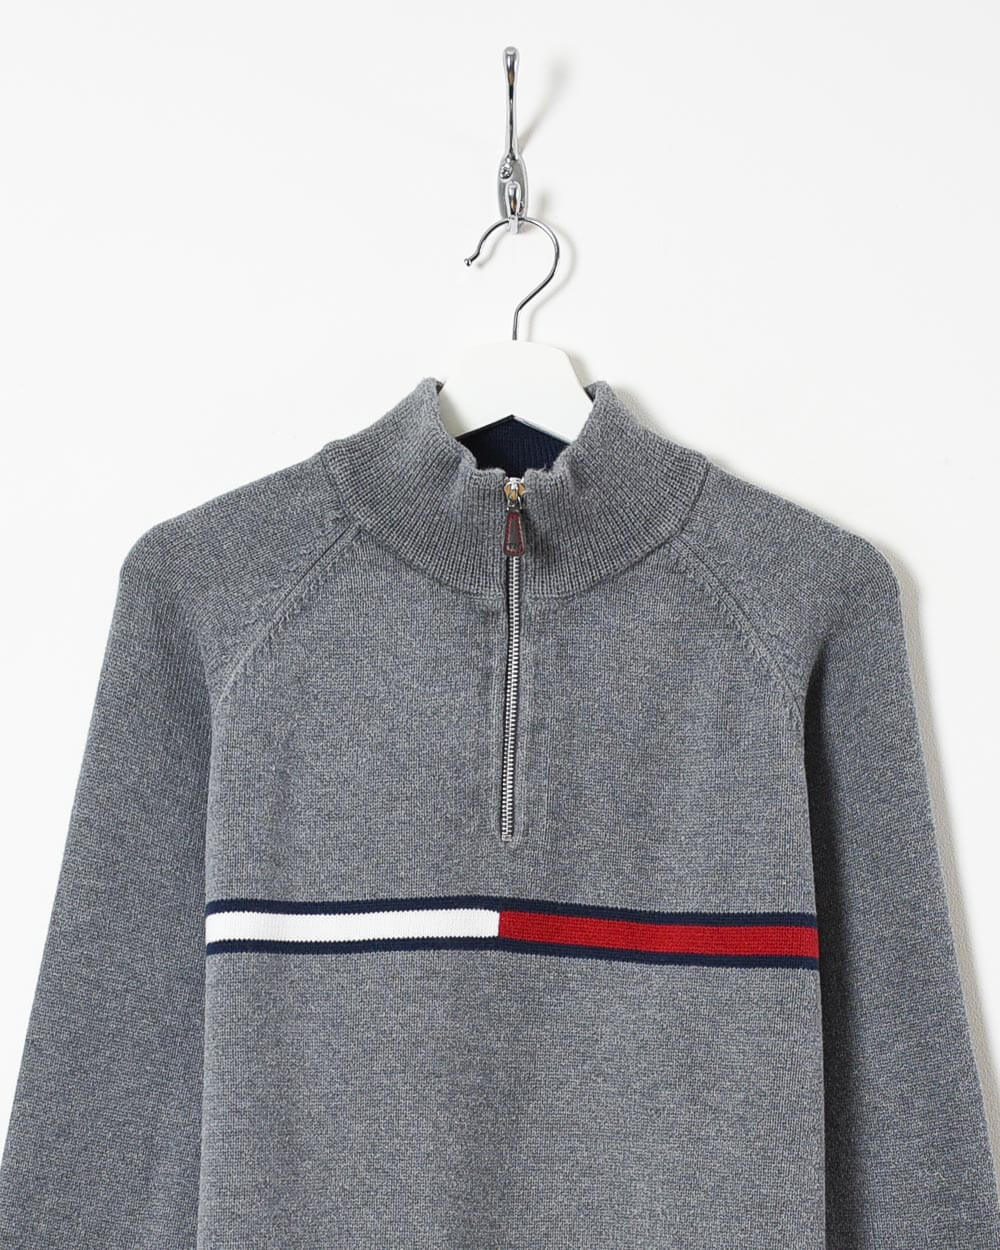 Grey Tommy Hilfiger 1/4 Zip Knitted Sweatshirt - Large